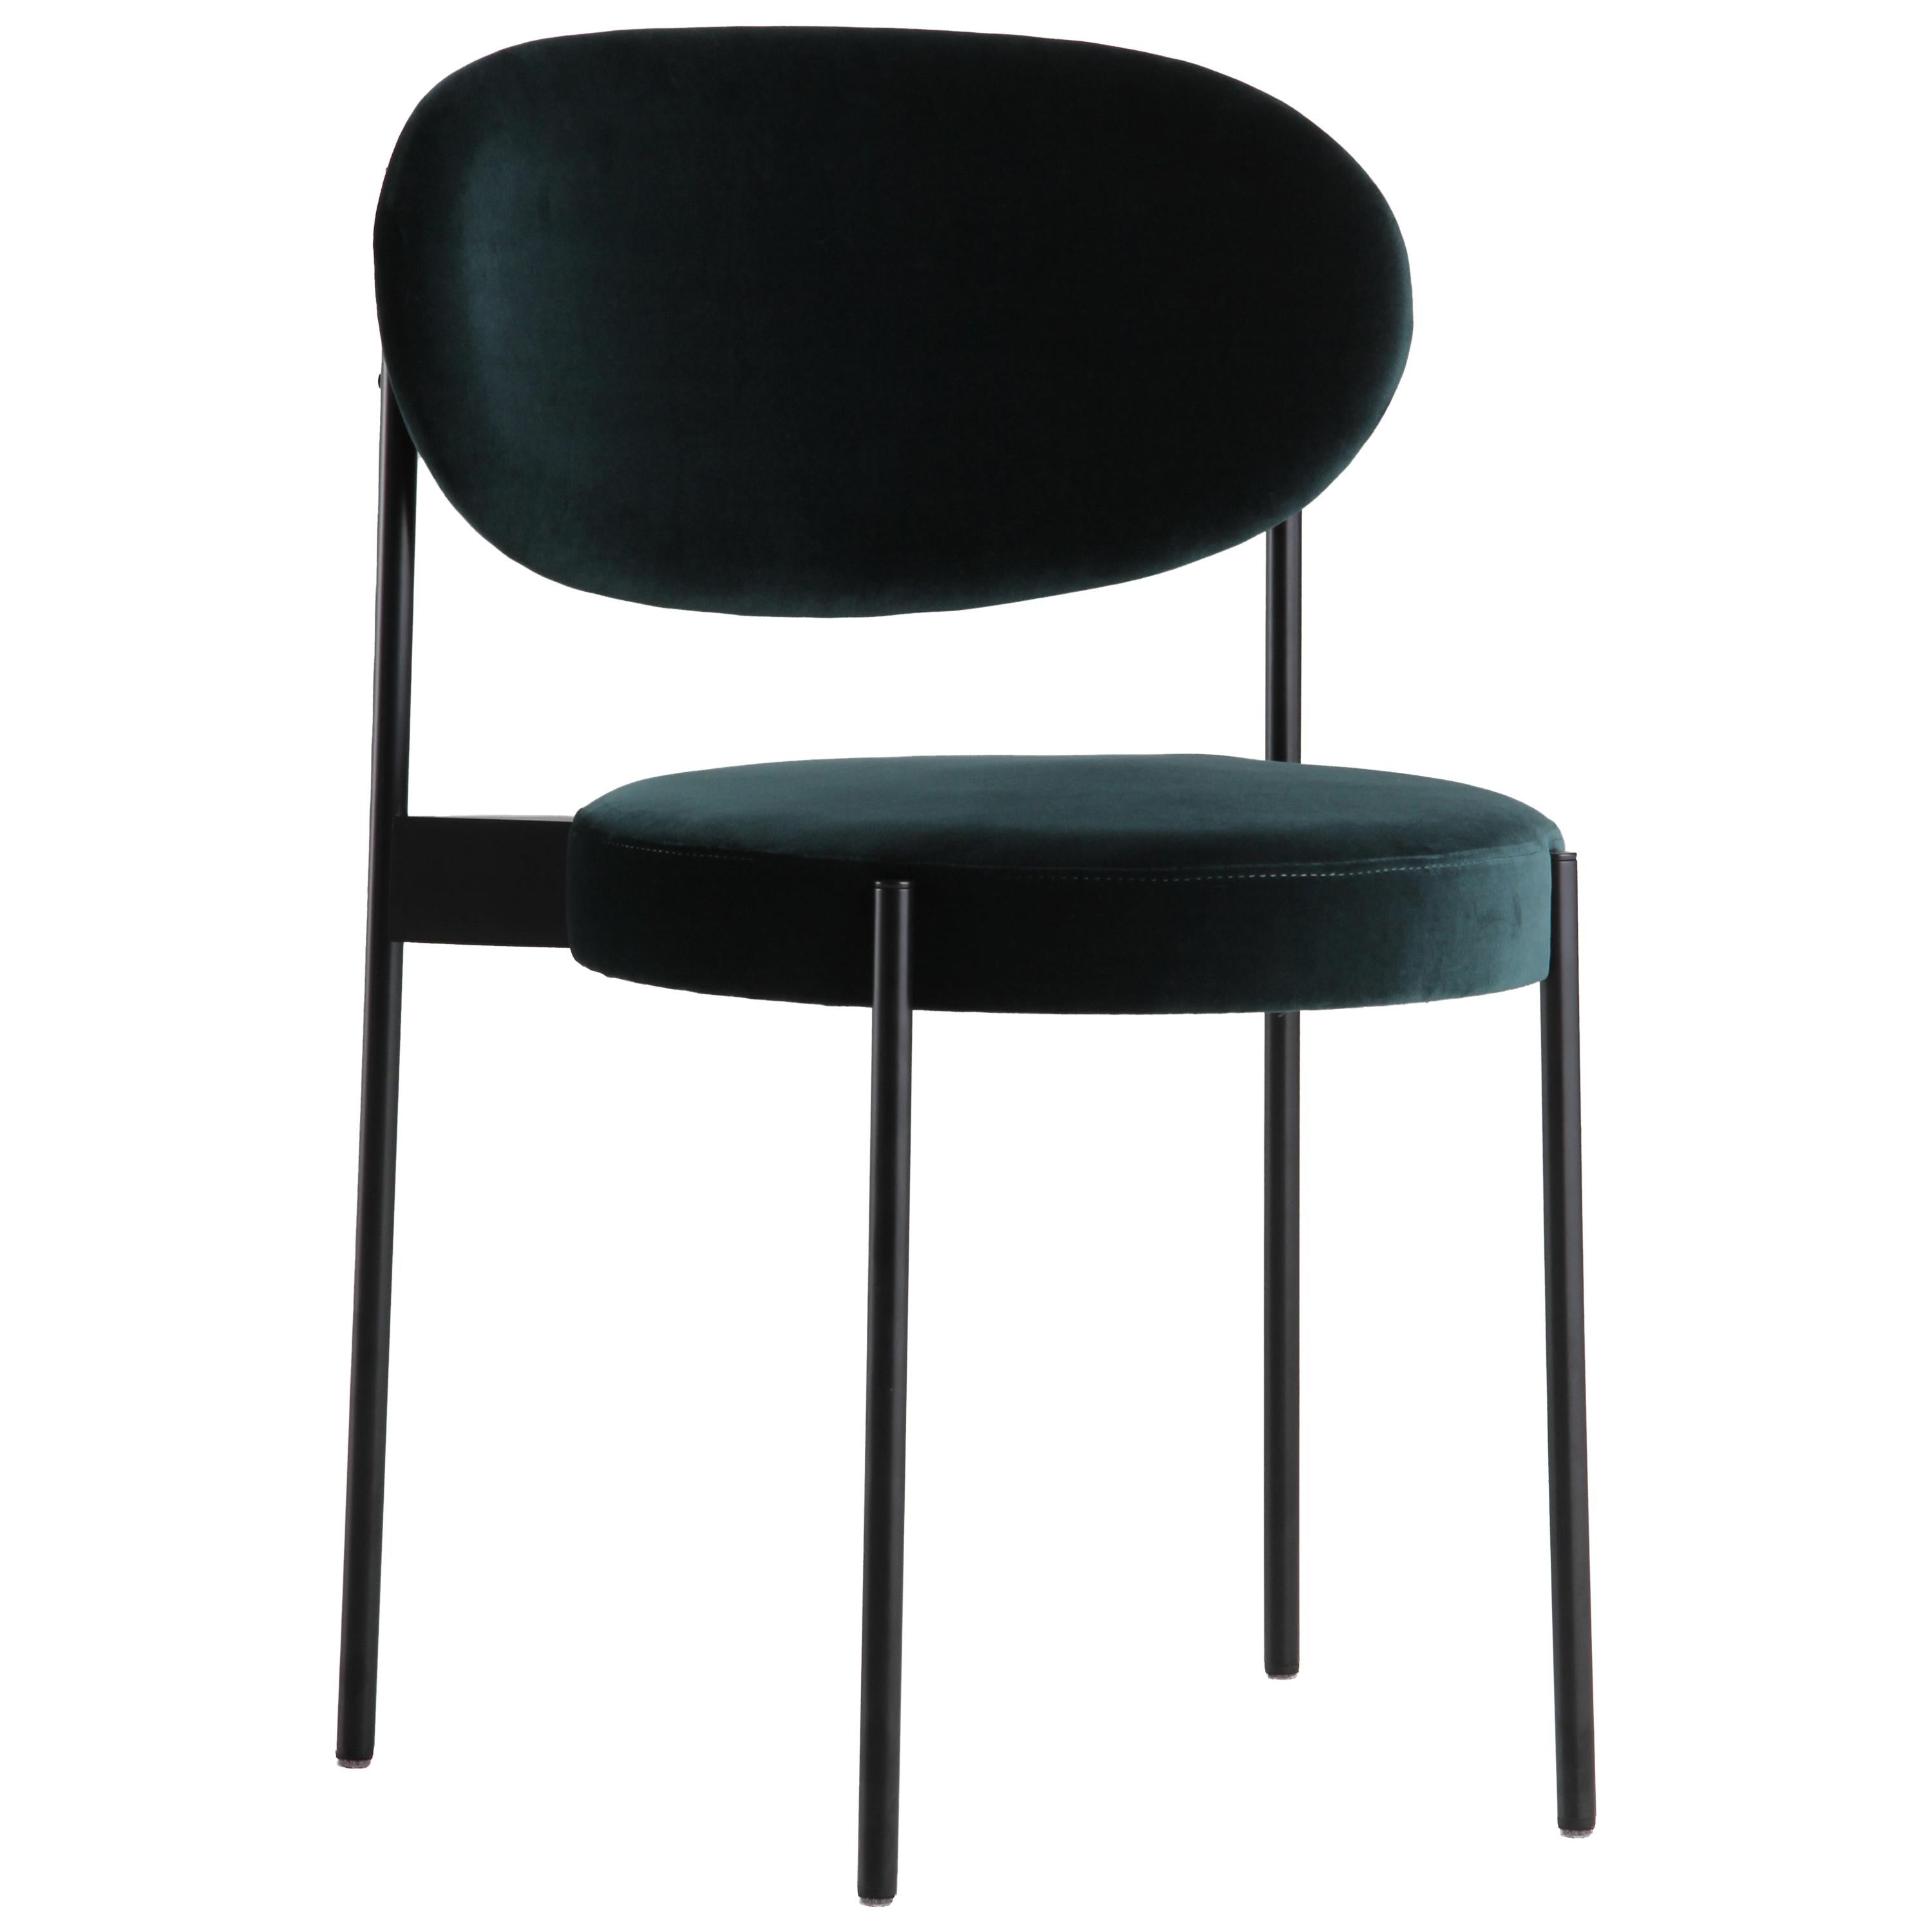 430 Chair in Green by Verner Panton